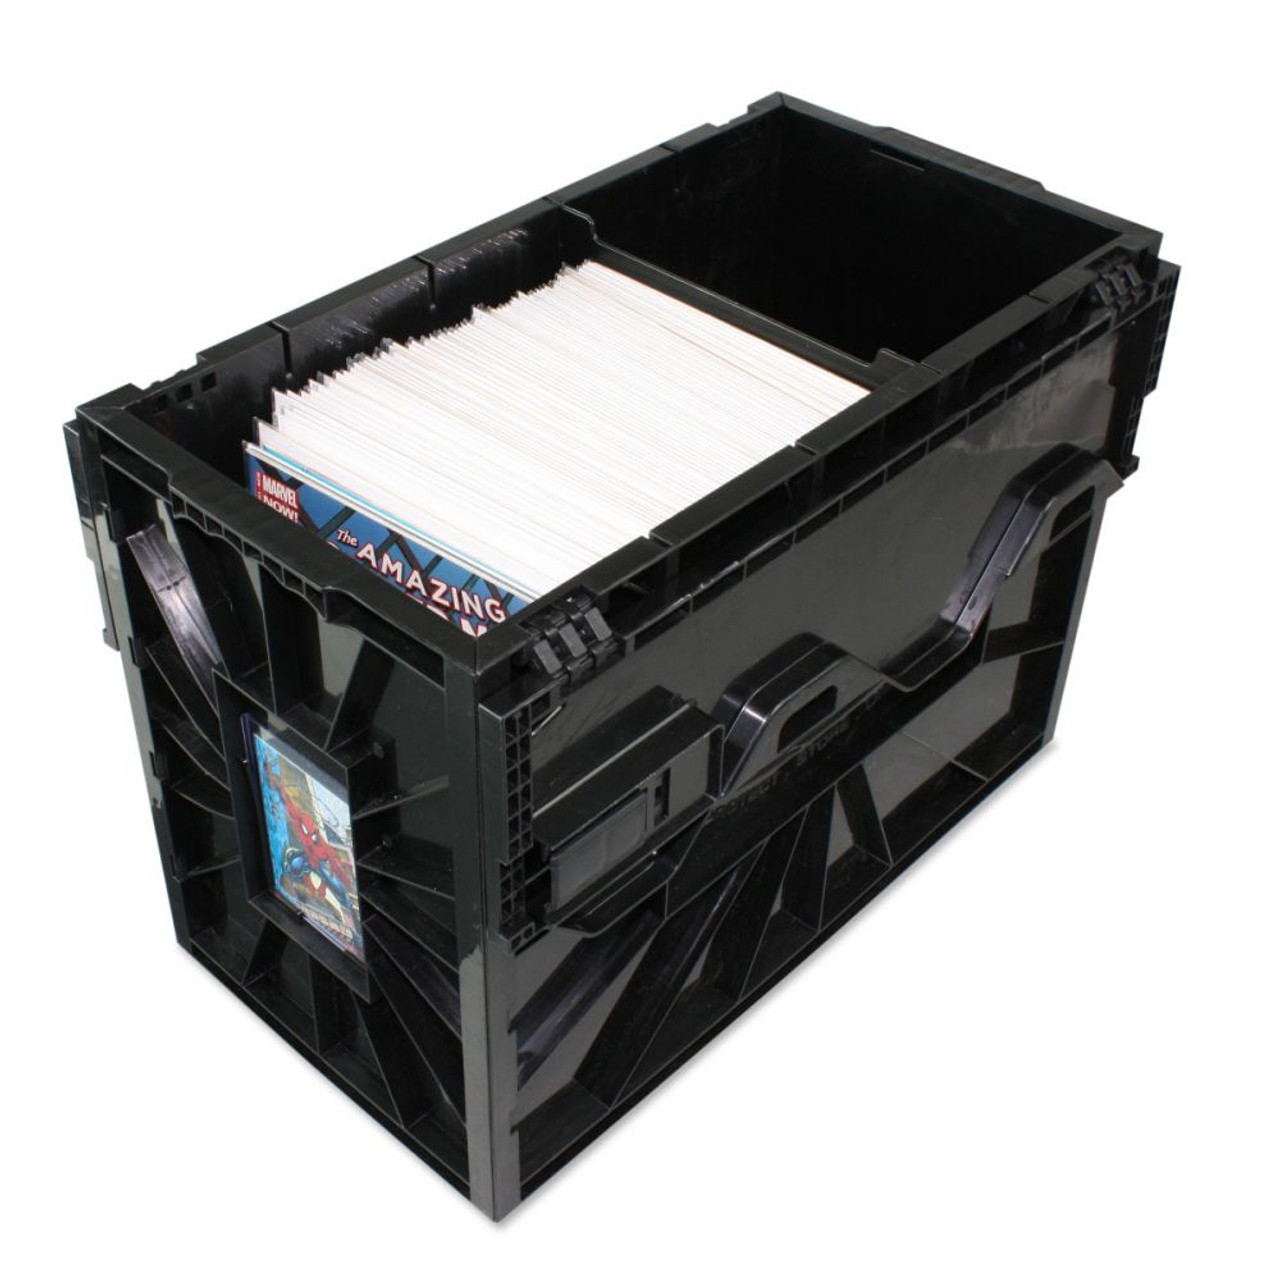 BCW Comic Book Short Box Storage Bin. The Collectors Resource